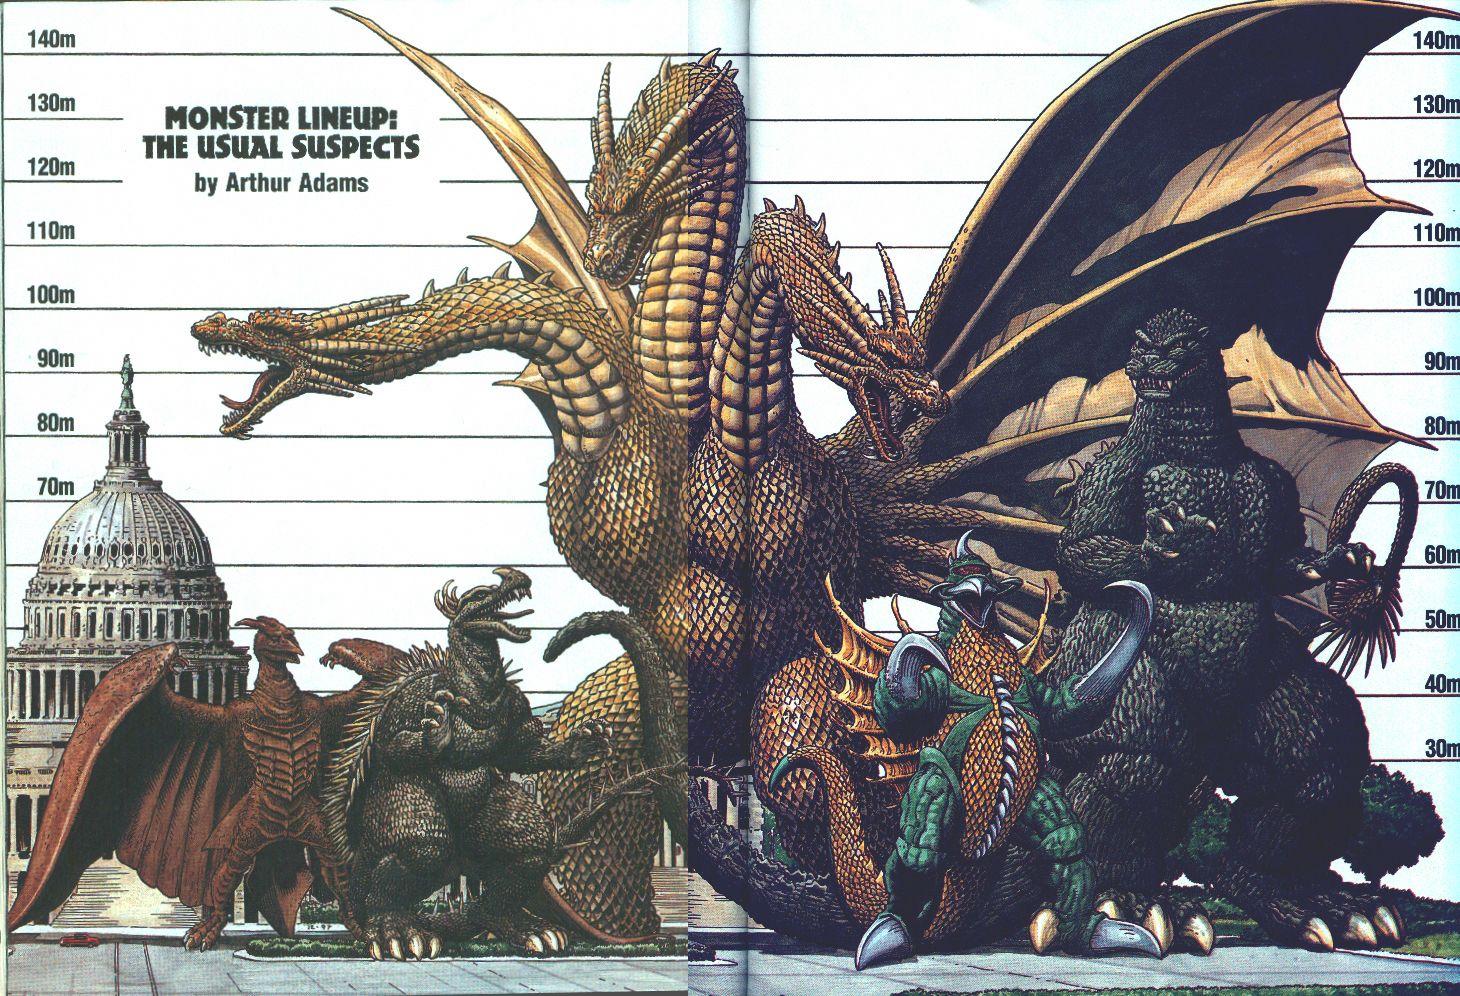 1460x996 Tải xuống miễn phí Godzilla HD Wallpaper General 557744 [1460x996]